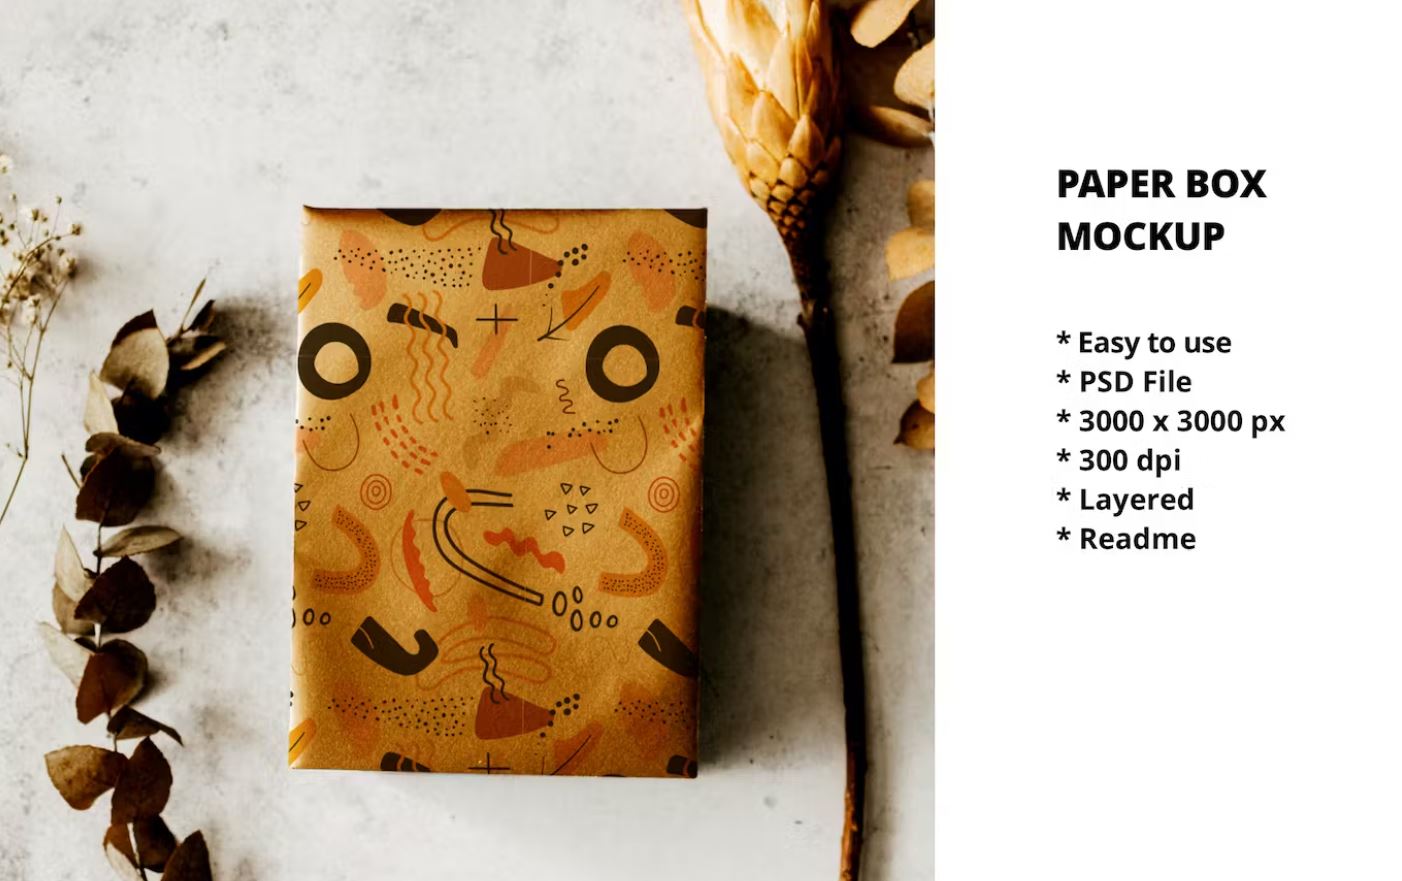 Cardboard Packaging Mockup PSD for Presenting Paper Design